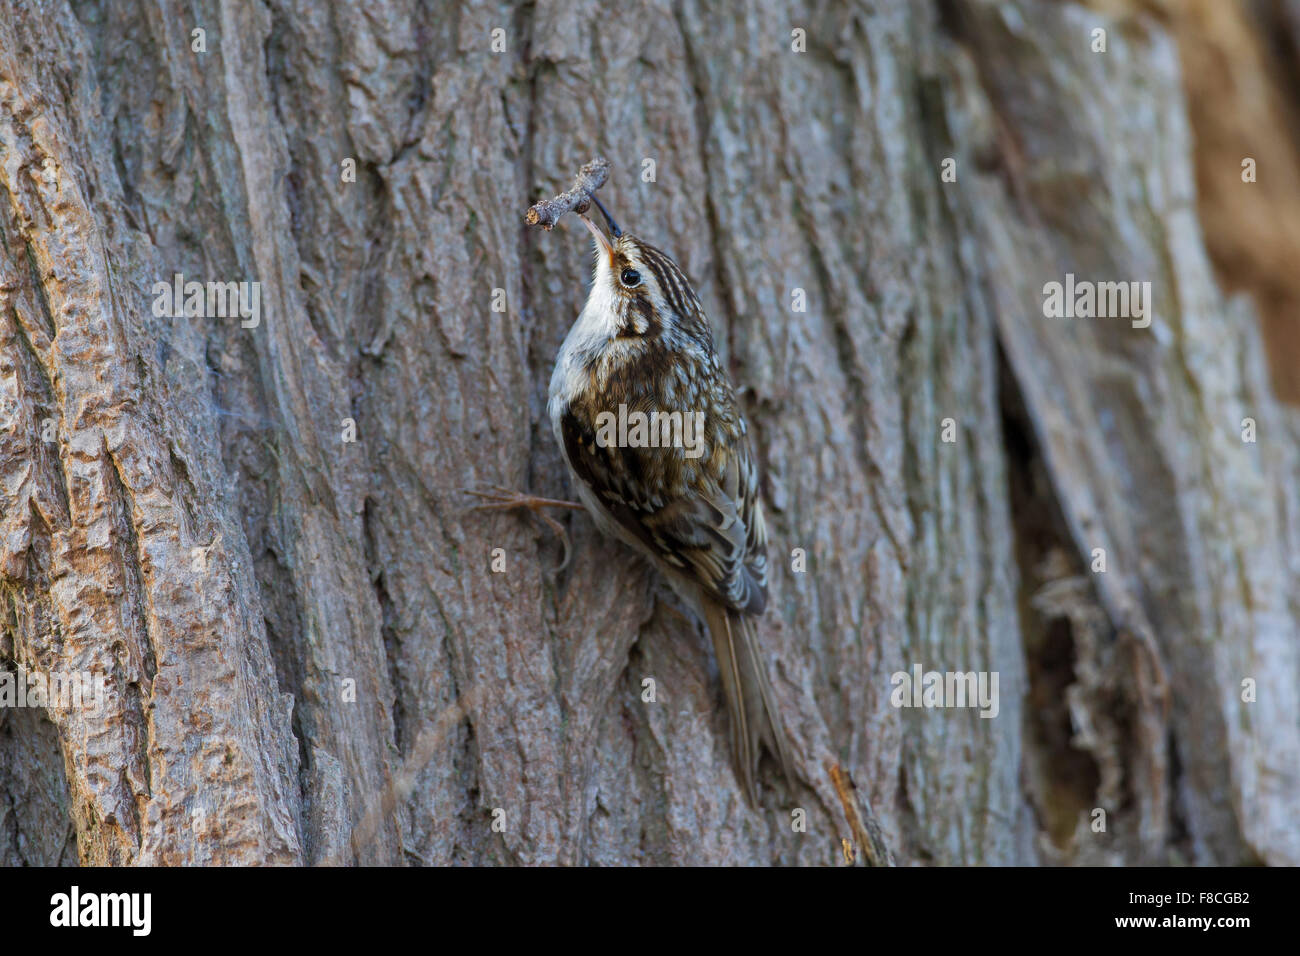 Eurasian treecreeper / common treecreeper (Certhia familiaris) climbing tree trunk with twig as nesting material in beak Stock Photo